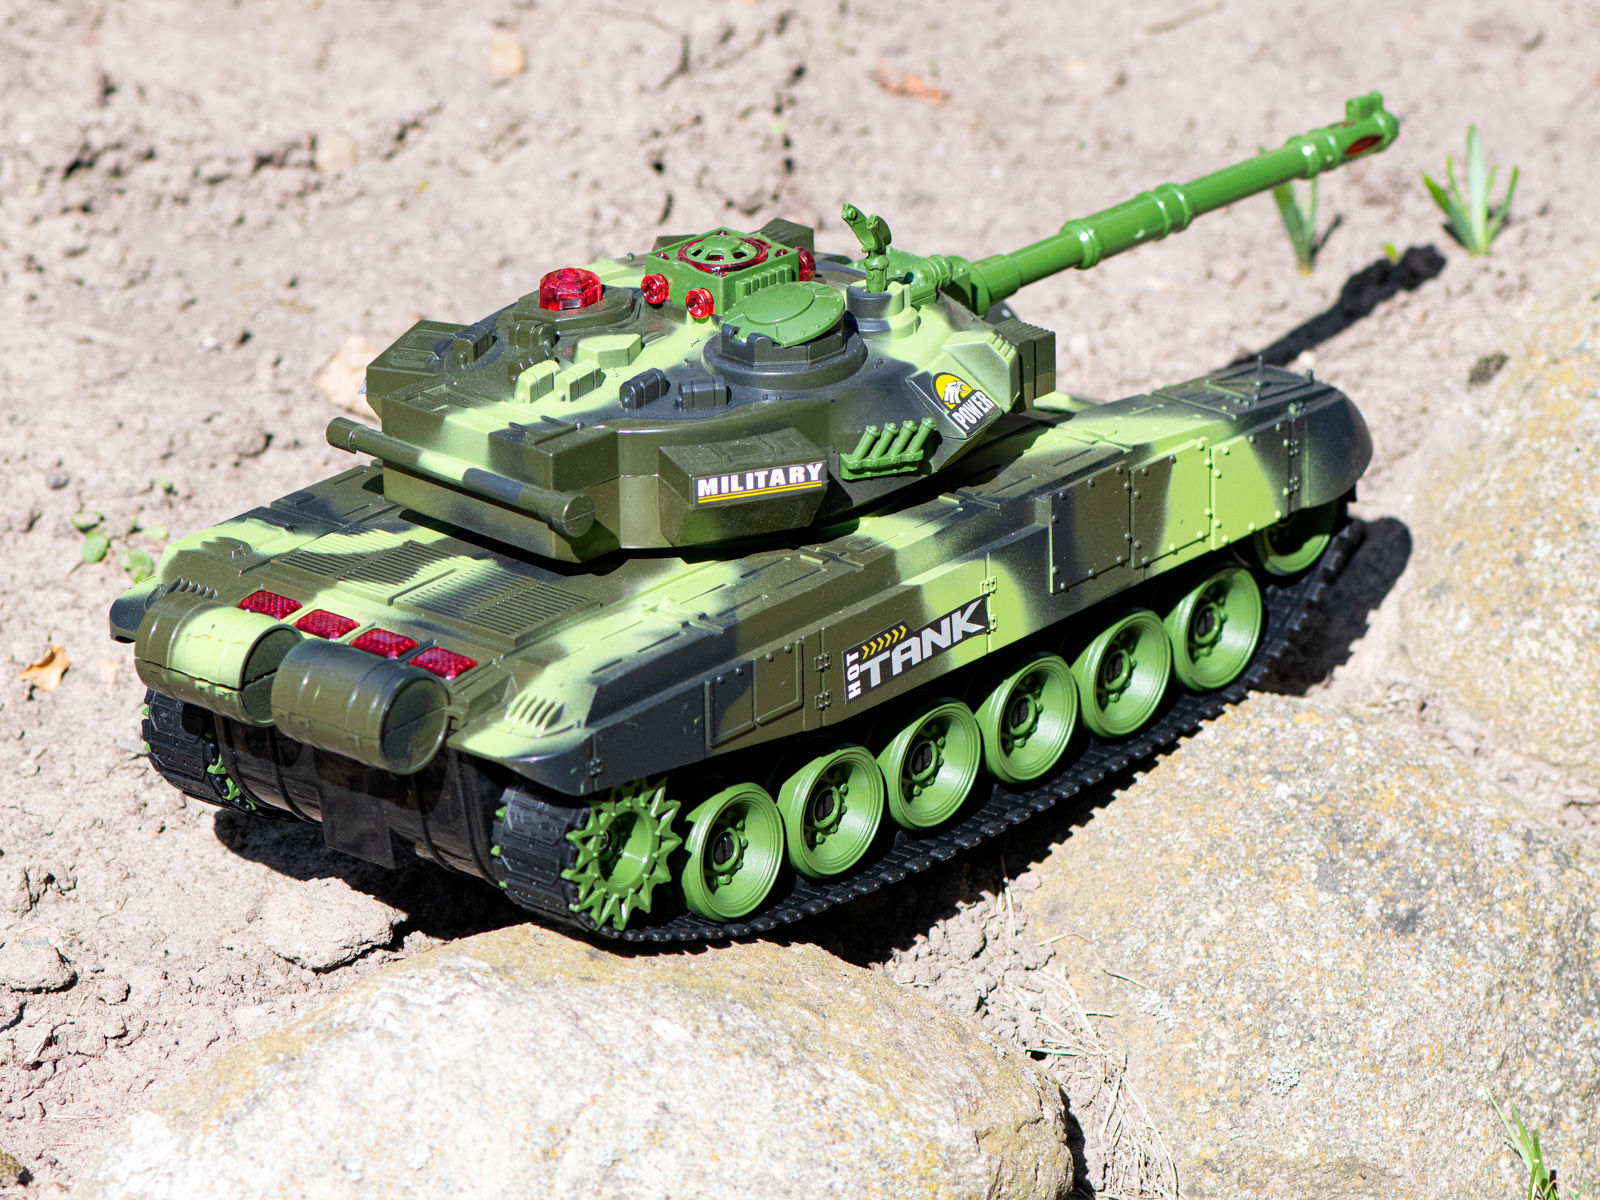 Czolg-RC-War-Tank-9993-2-4-GHz-kamuflaz-lesny-138217.jpg